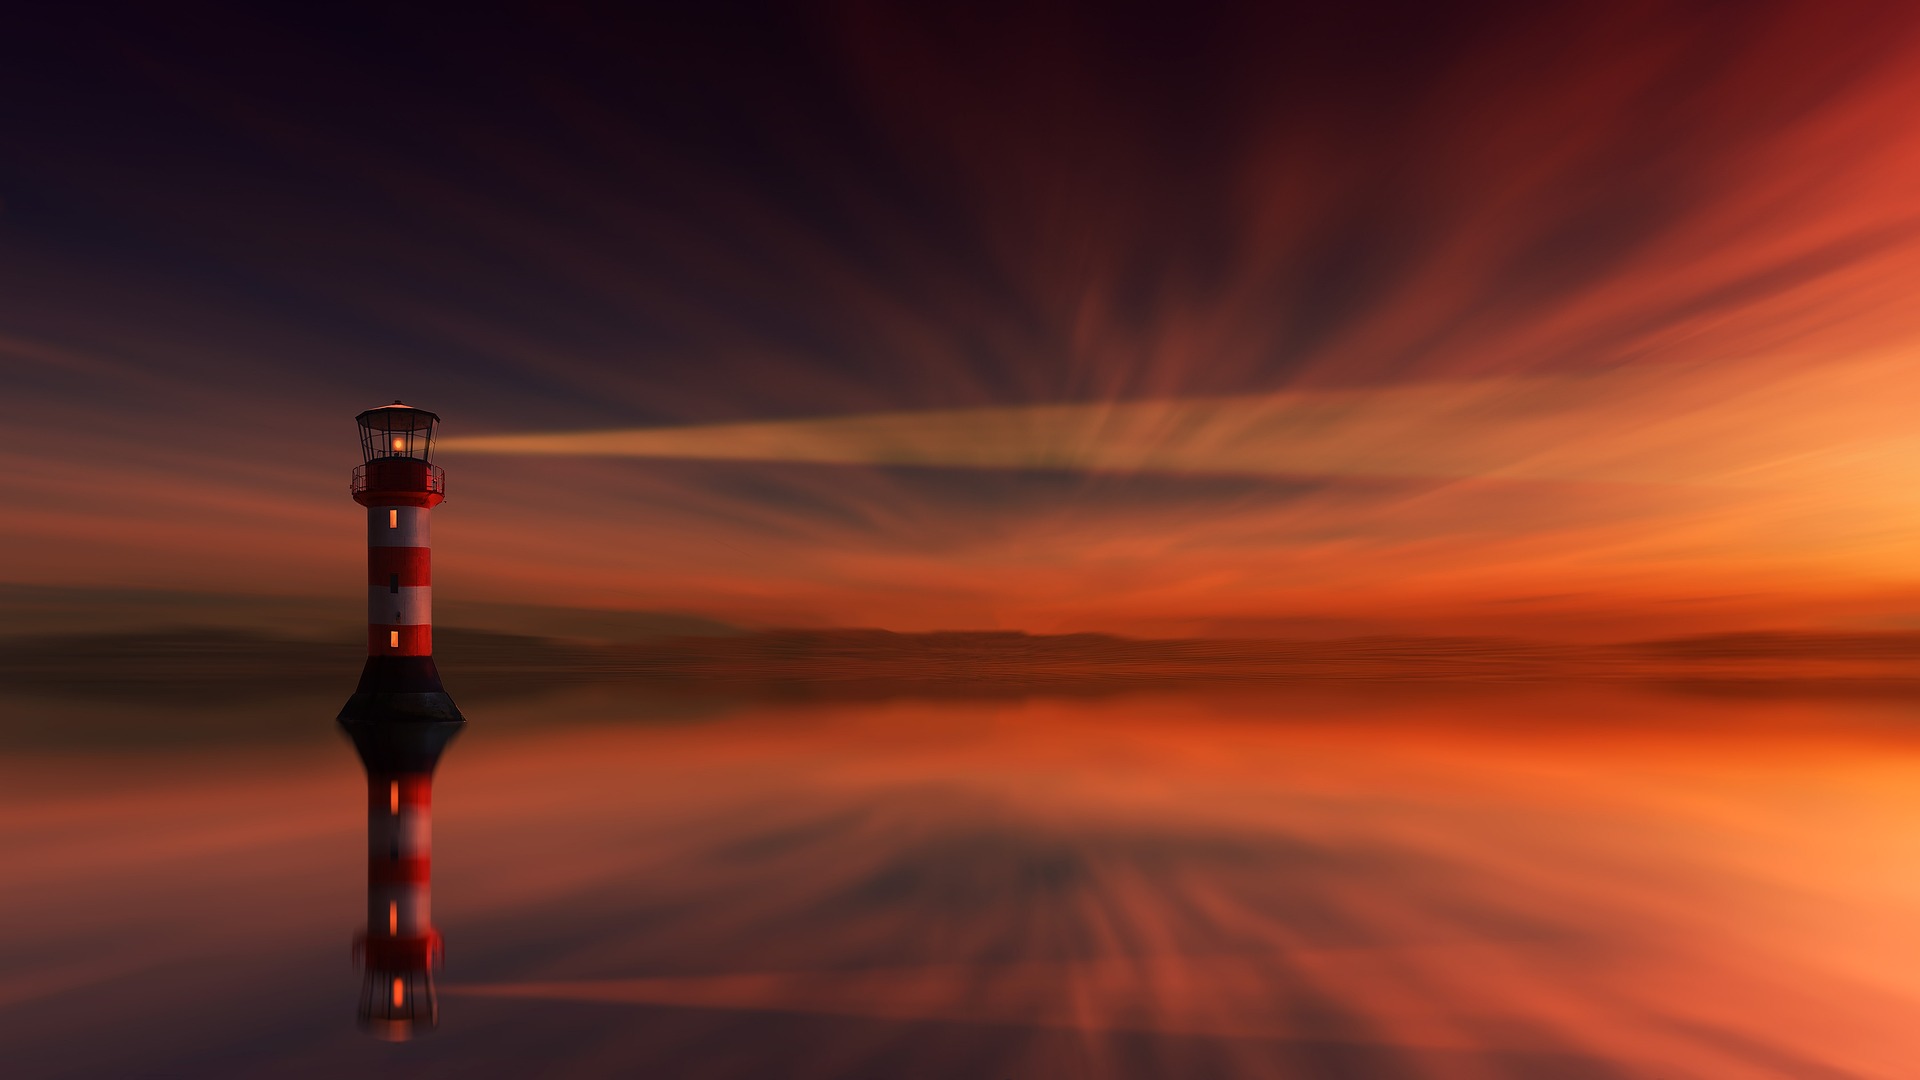 Bild: sunset-3120484_1920 (Quelle: pixabay.com)